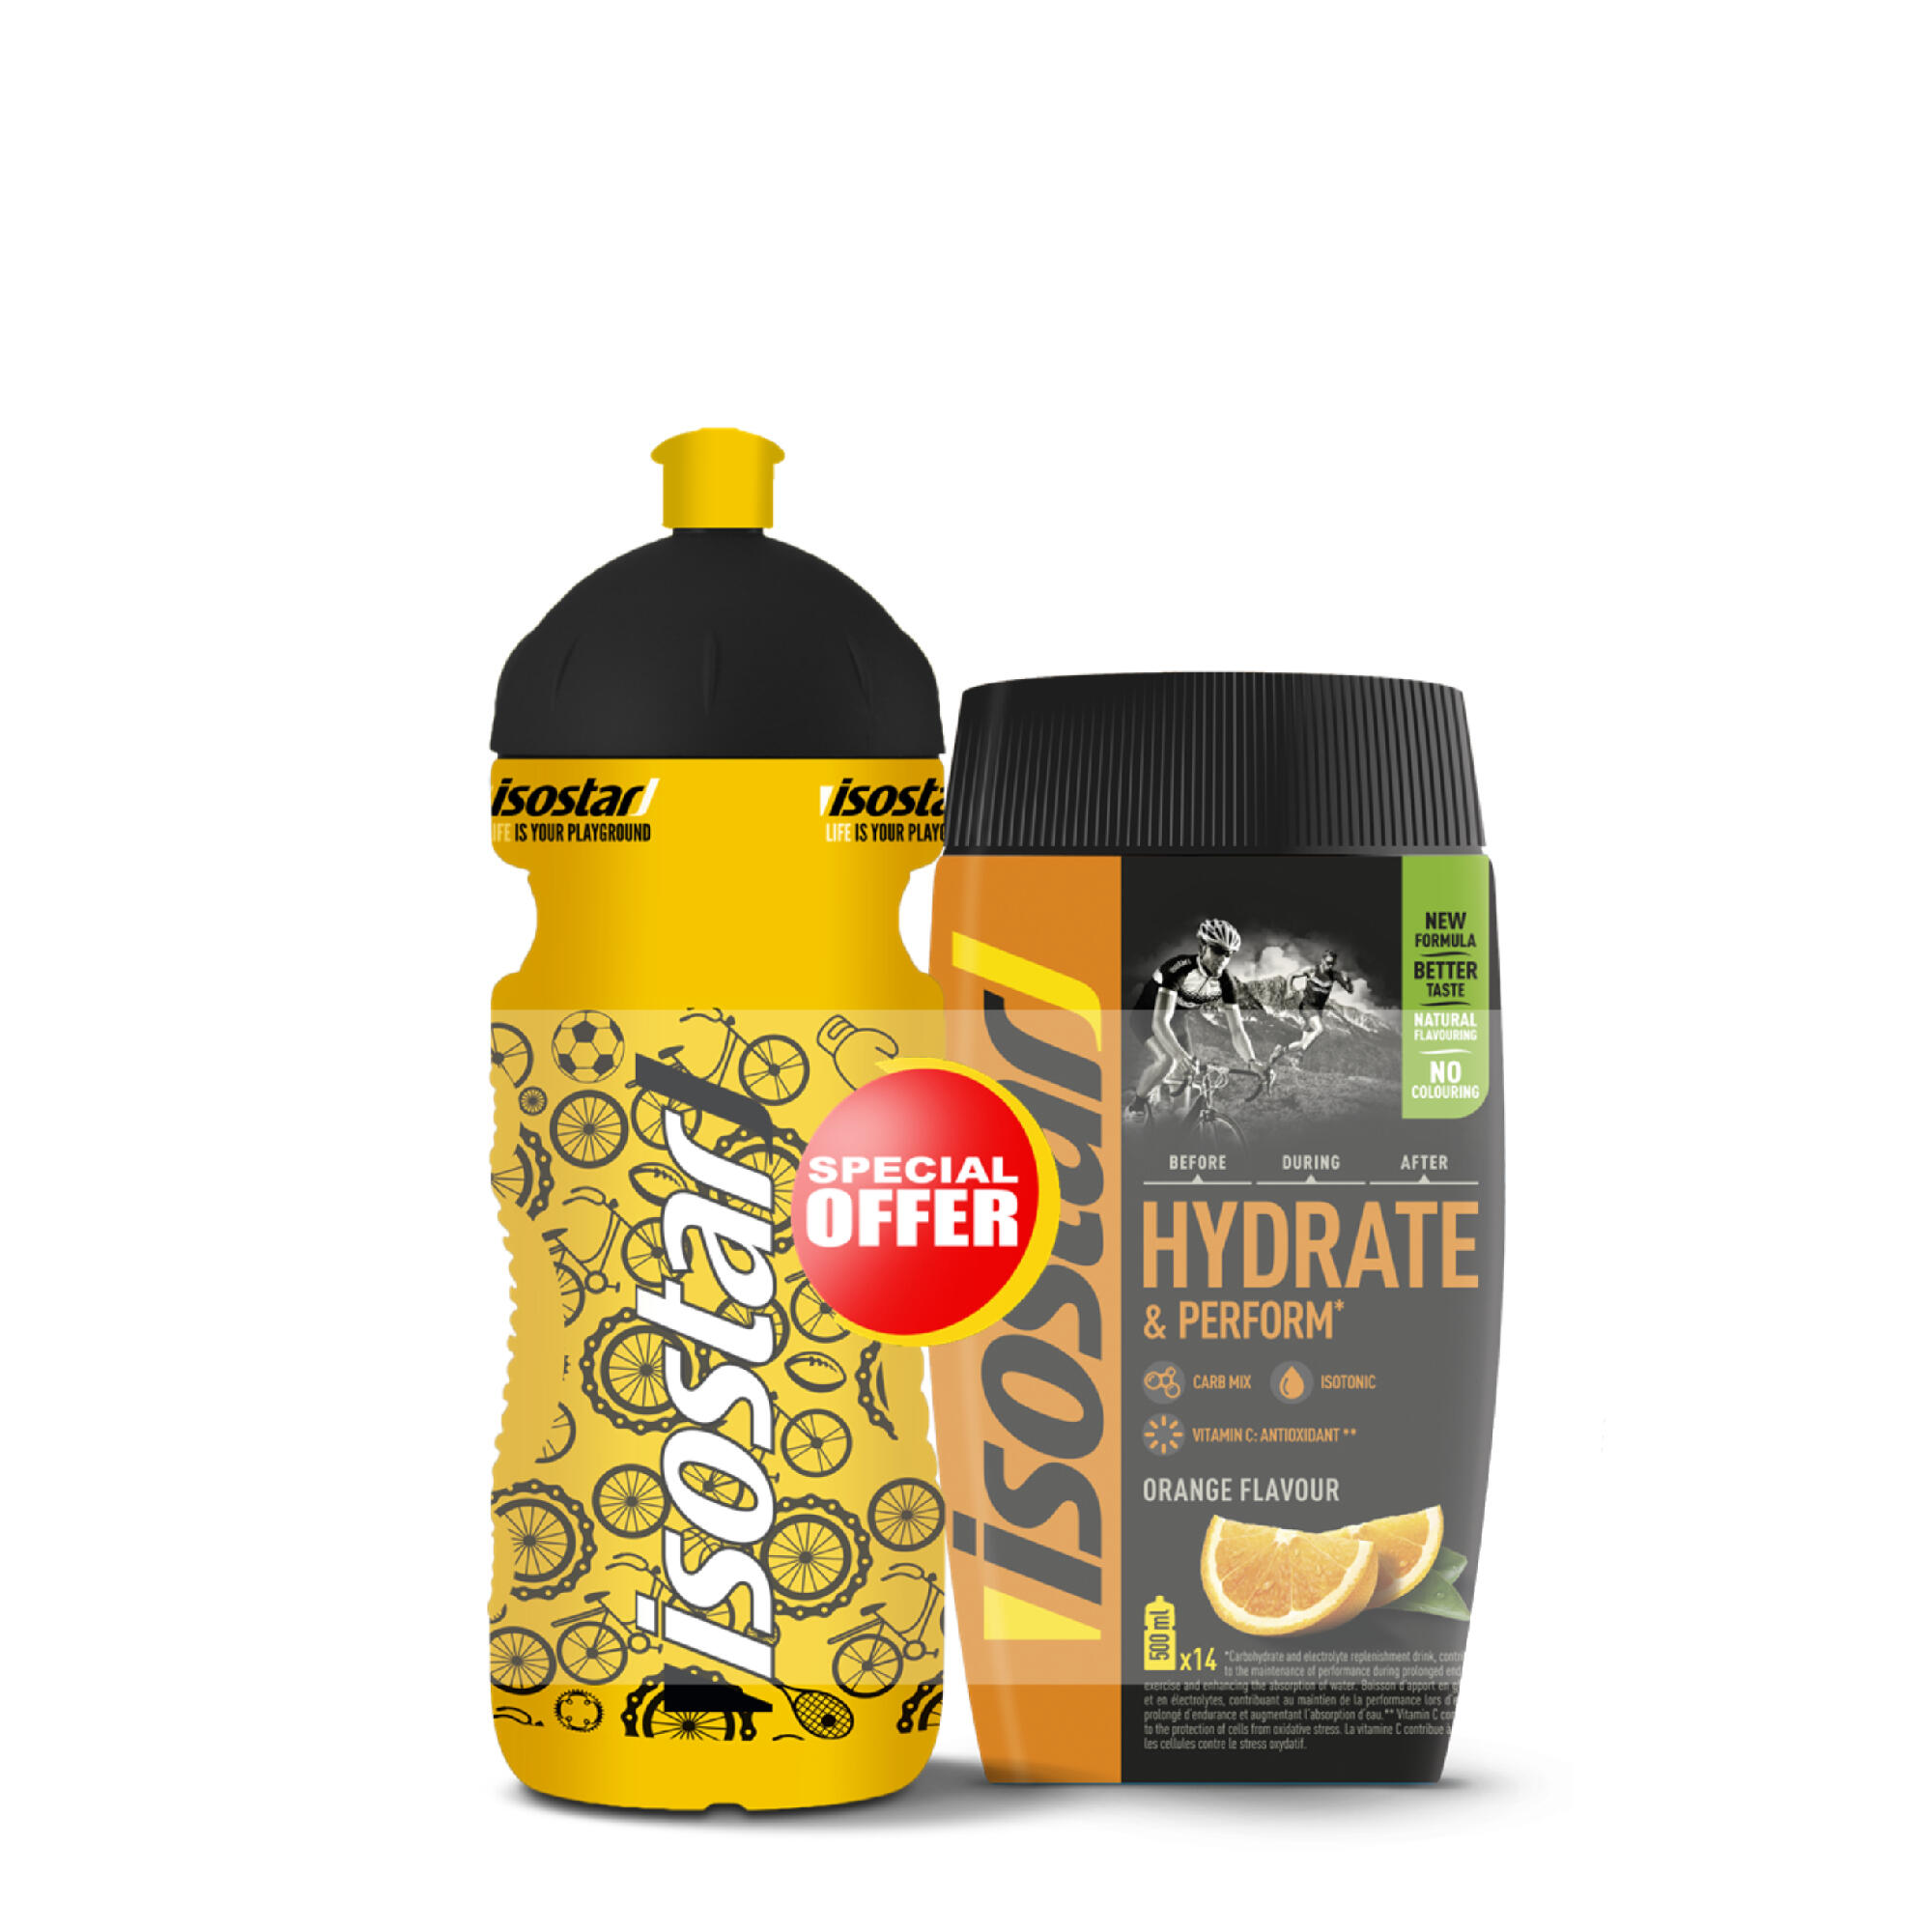 Isotermisk Dryck Specialerbjudande Hydrate&Perform Apelsin 560g/flaska 0.65l